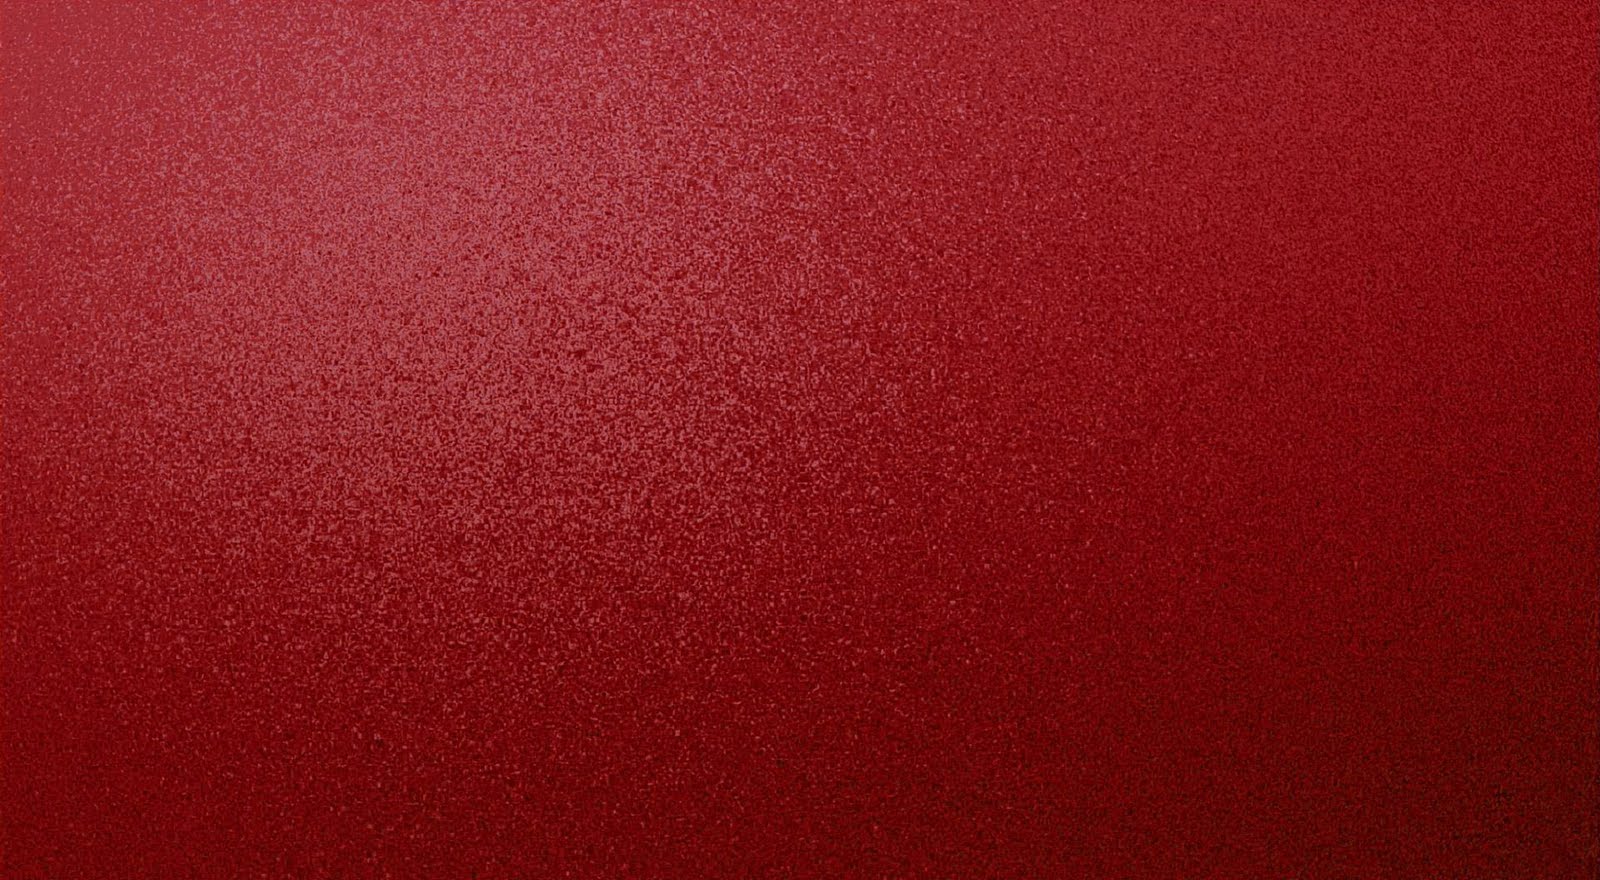 Red Wallpaper Texture 2 205232 Image HD Wallpaper. Wallfoy.com